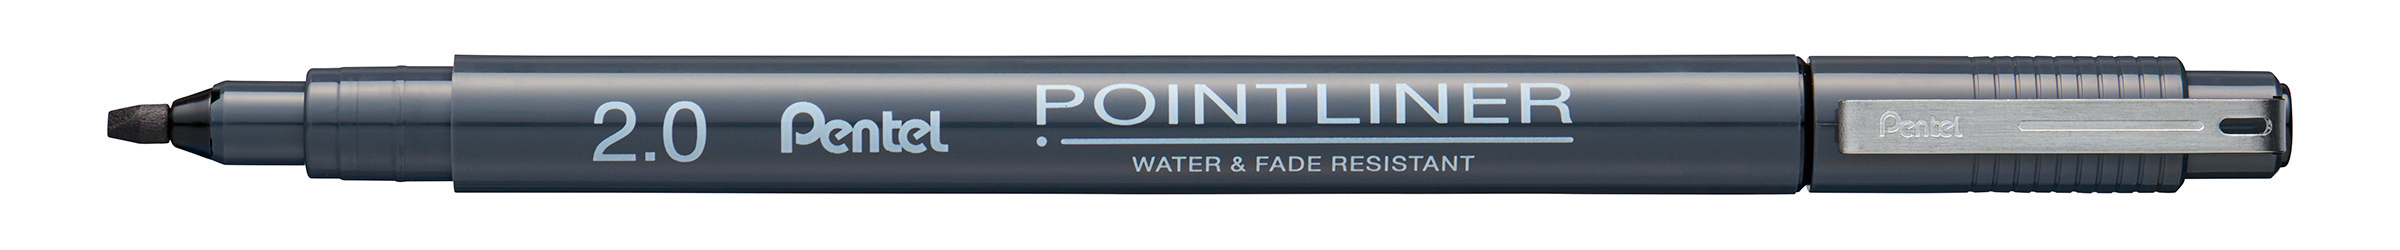 PENTEL Fineliner Pigment 2.0 mm S20P-C2A POINTLINER, noir POINTLINER, noir